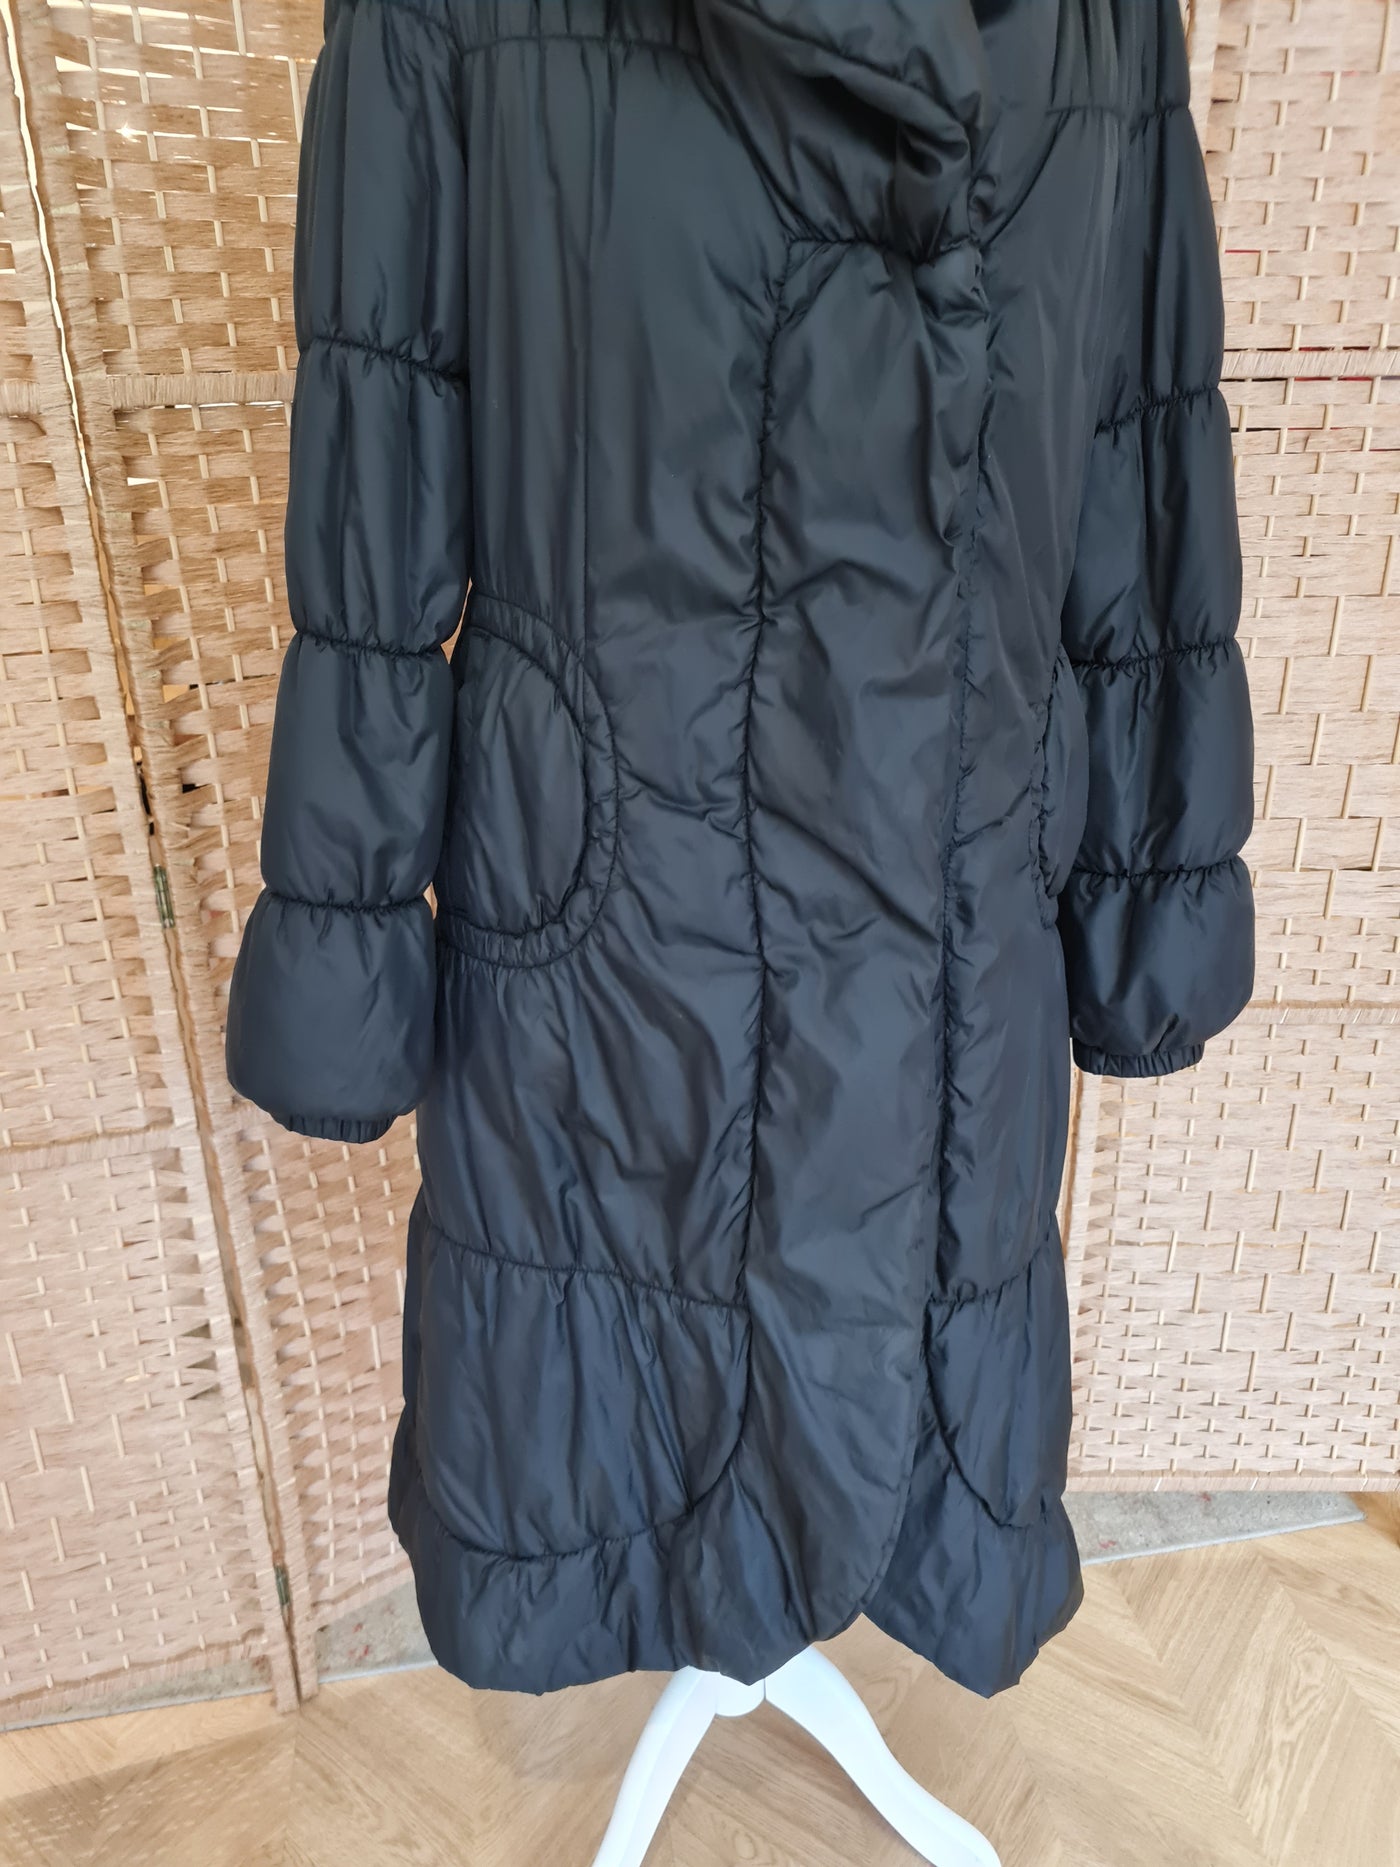 TYF Black Puffa Coat Size 12